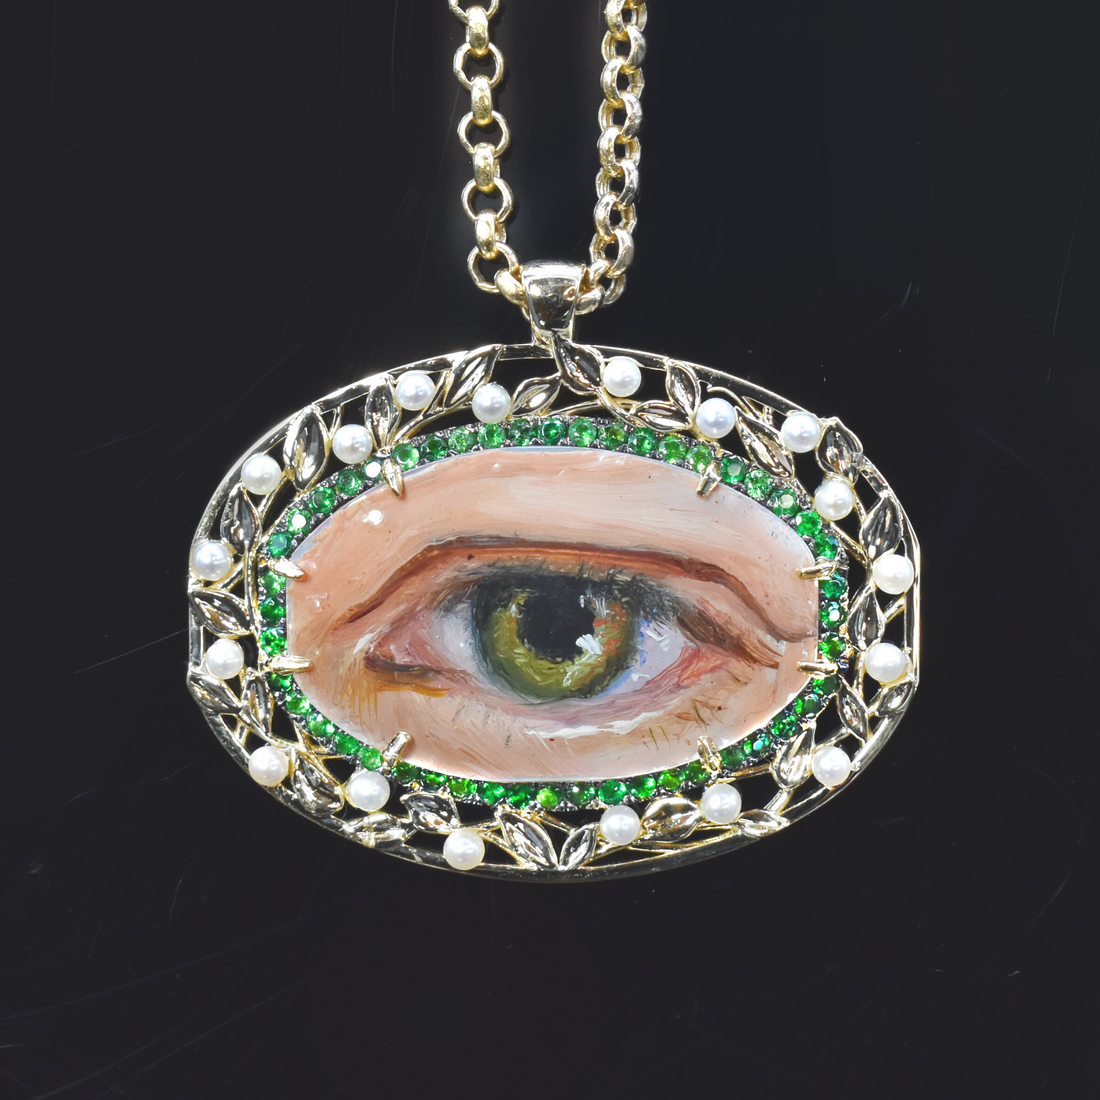 miniaturist portrait, the lovers eye necklace